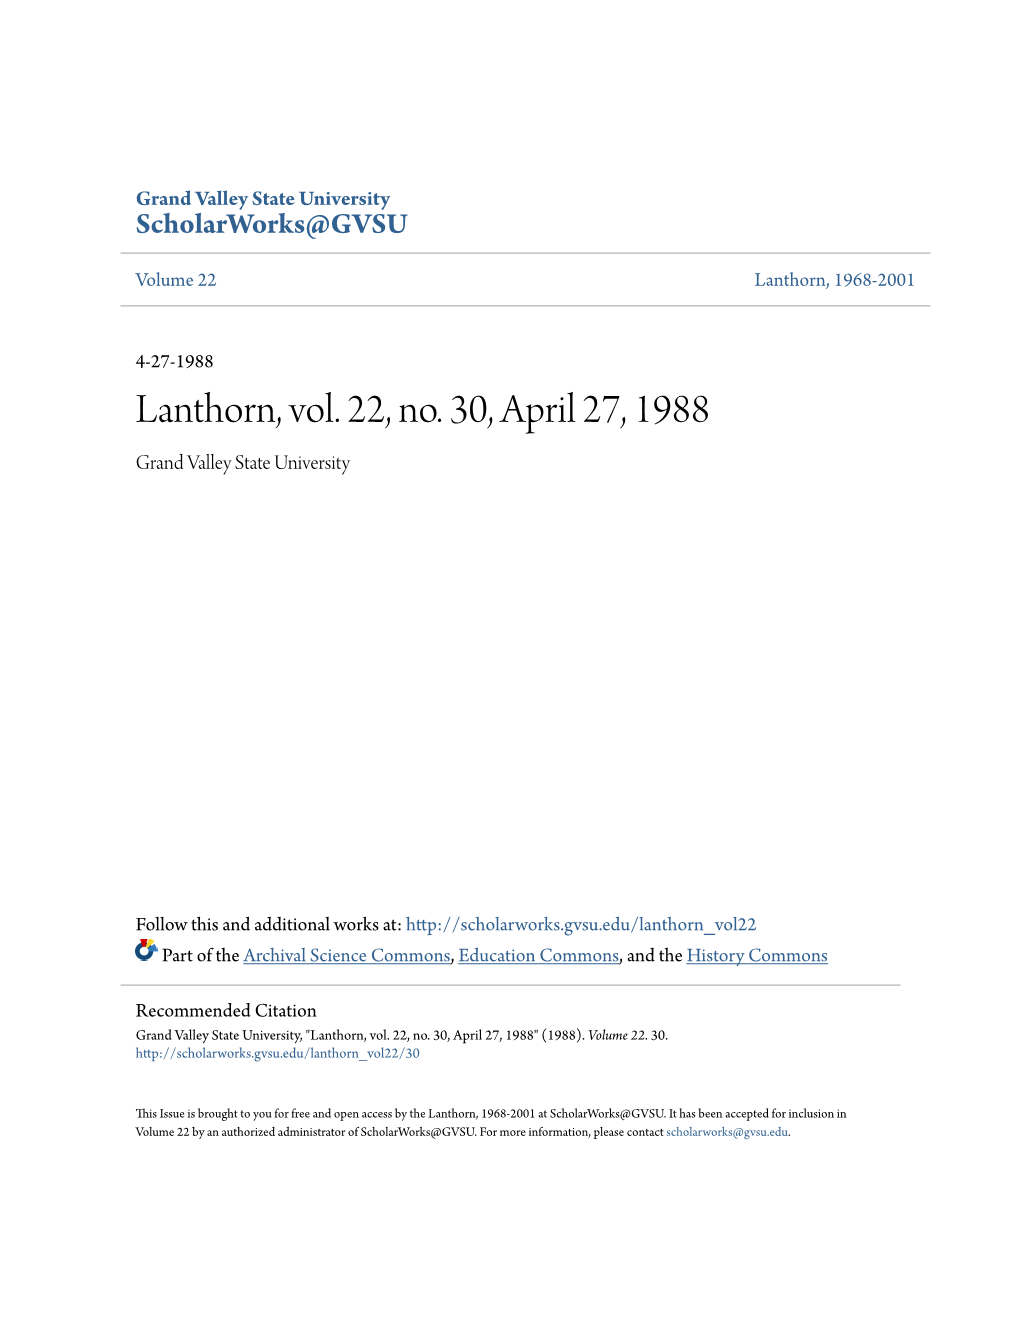 Lanthorn, Vol. 22, No. 30, April 27, 1988 Grand Valley State University